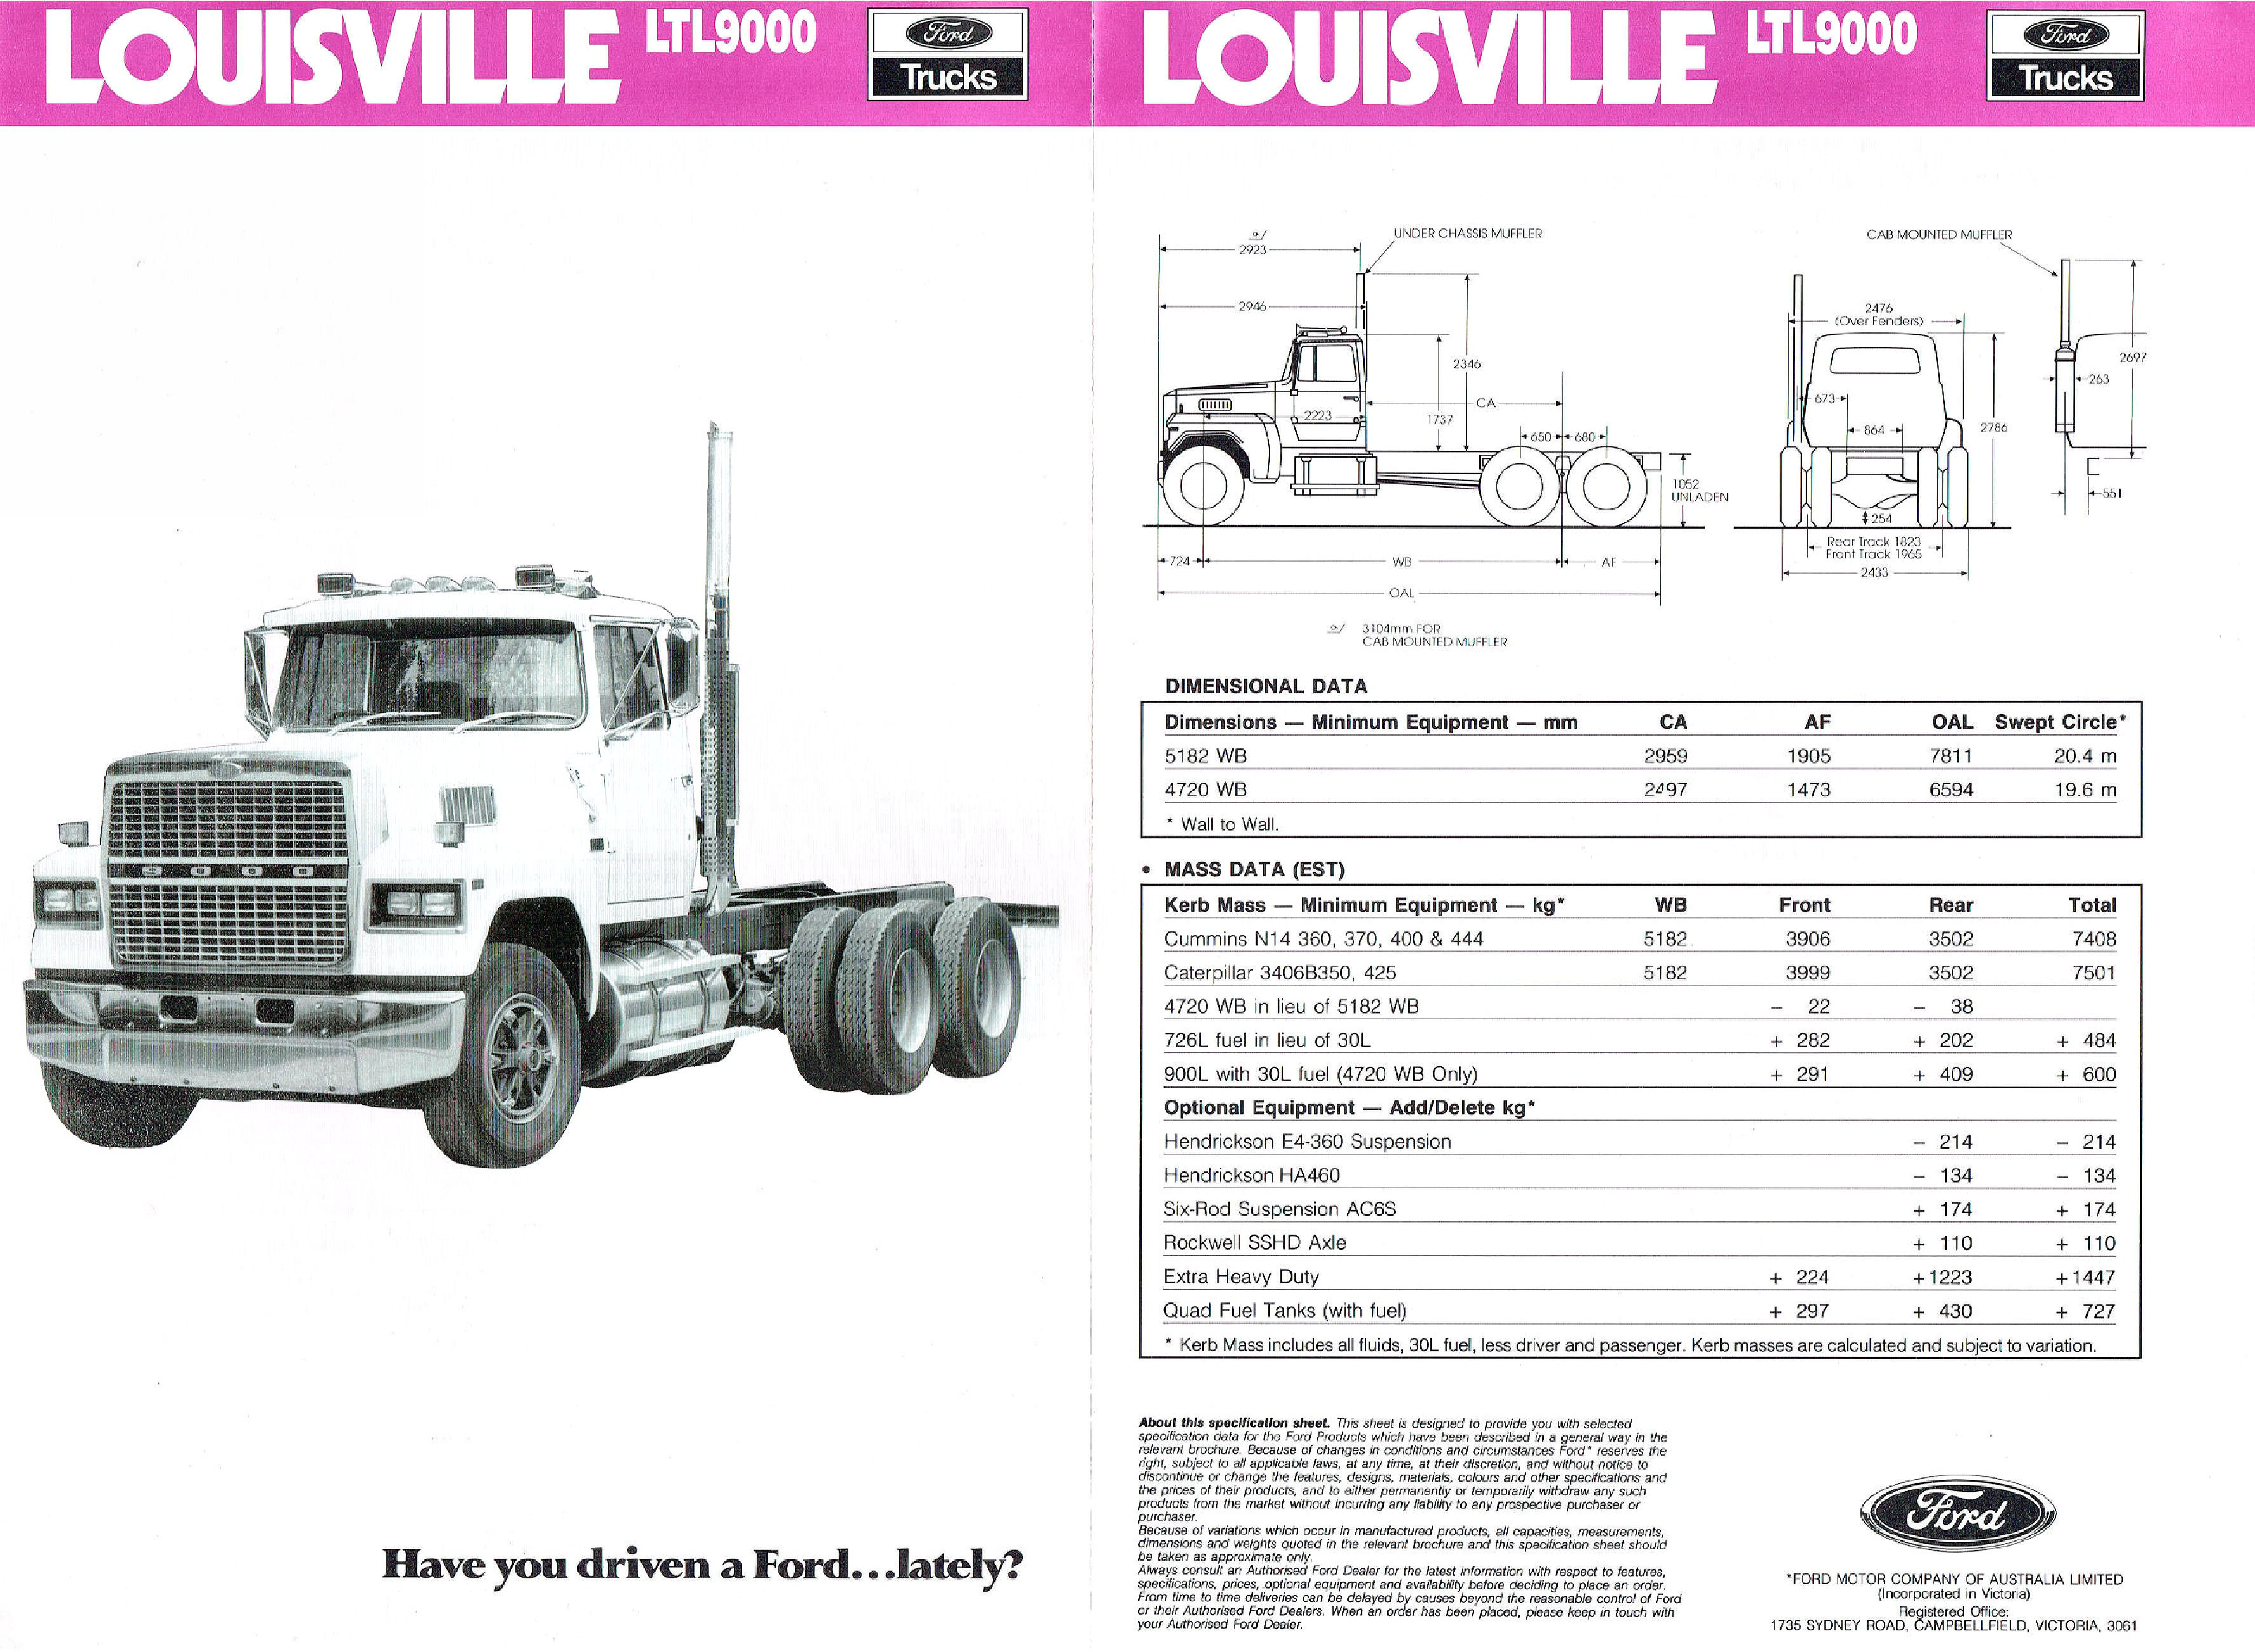 1990 Ford Louisville LTL9000 (Aus)-Side A.jpg-2022-12-7 13.54.58